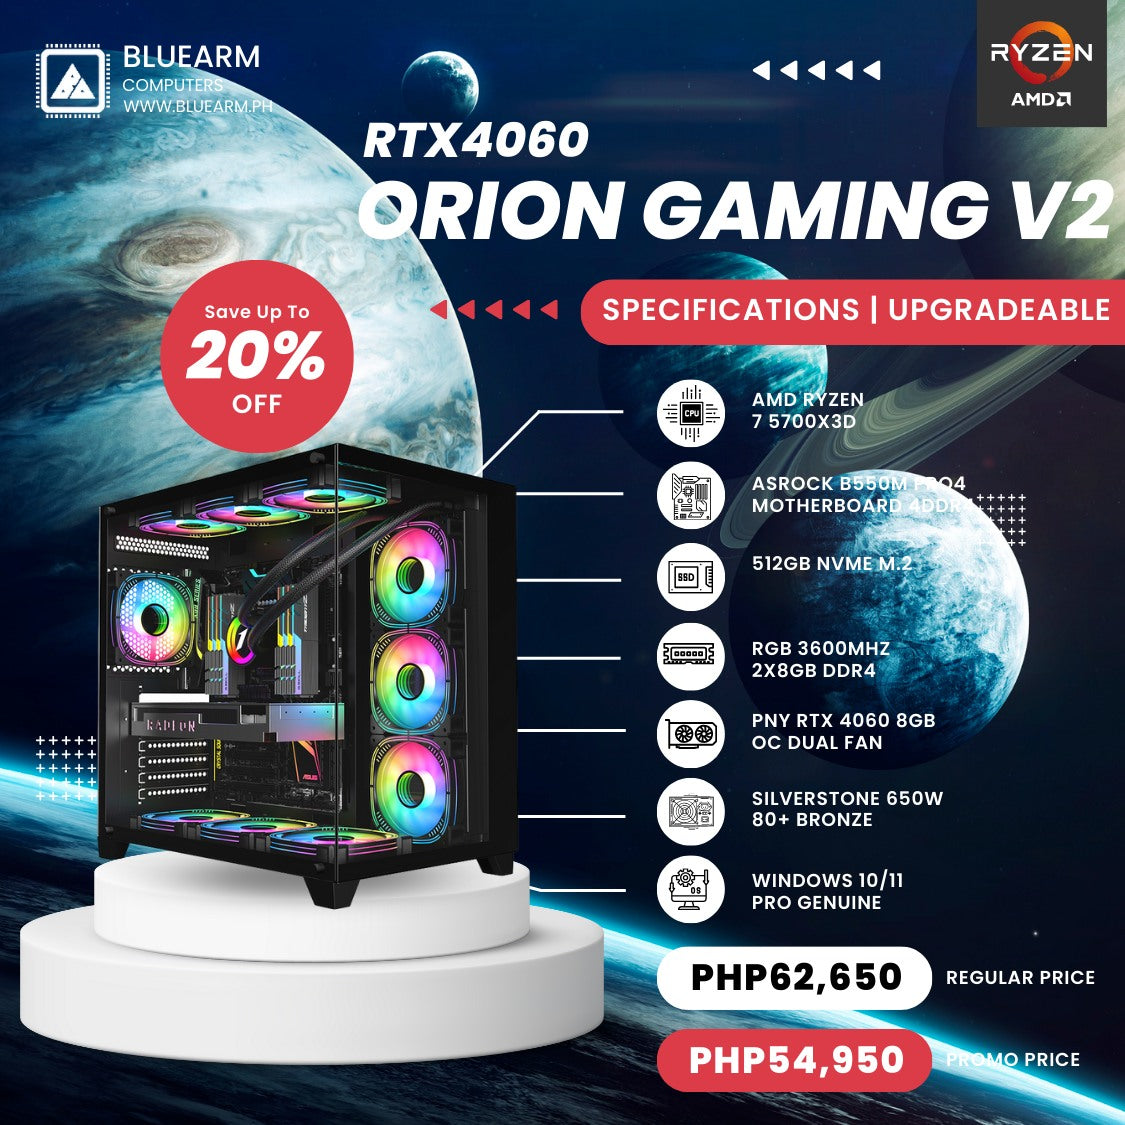 AMD RYZEN 7 5700X3D ORION GAMING BUILD V2